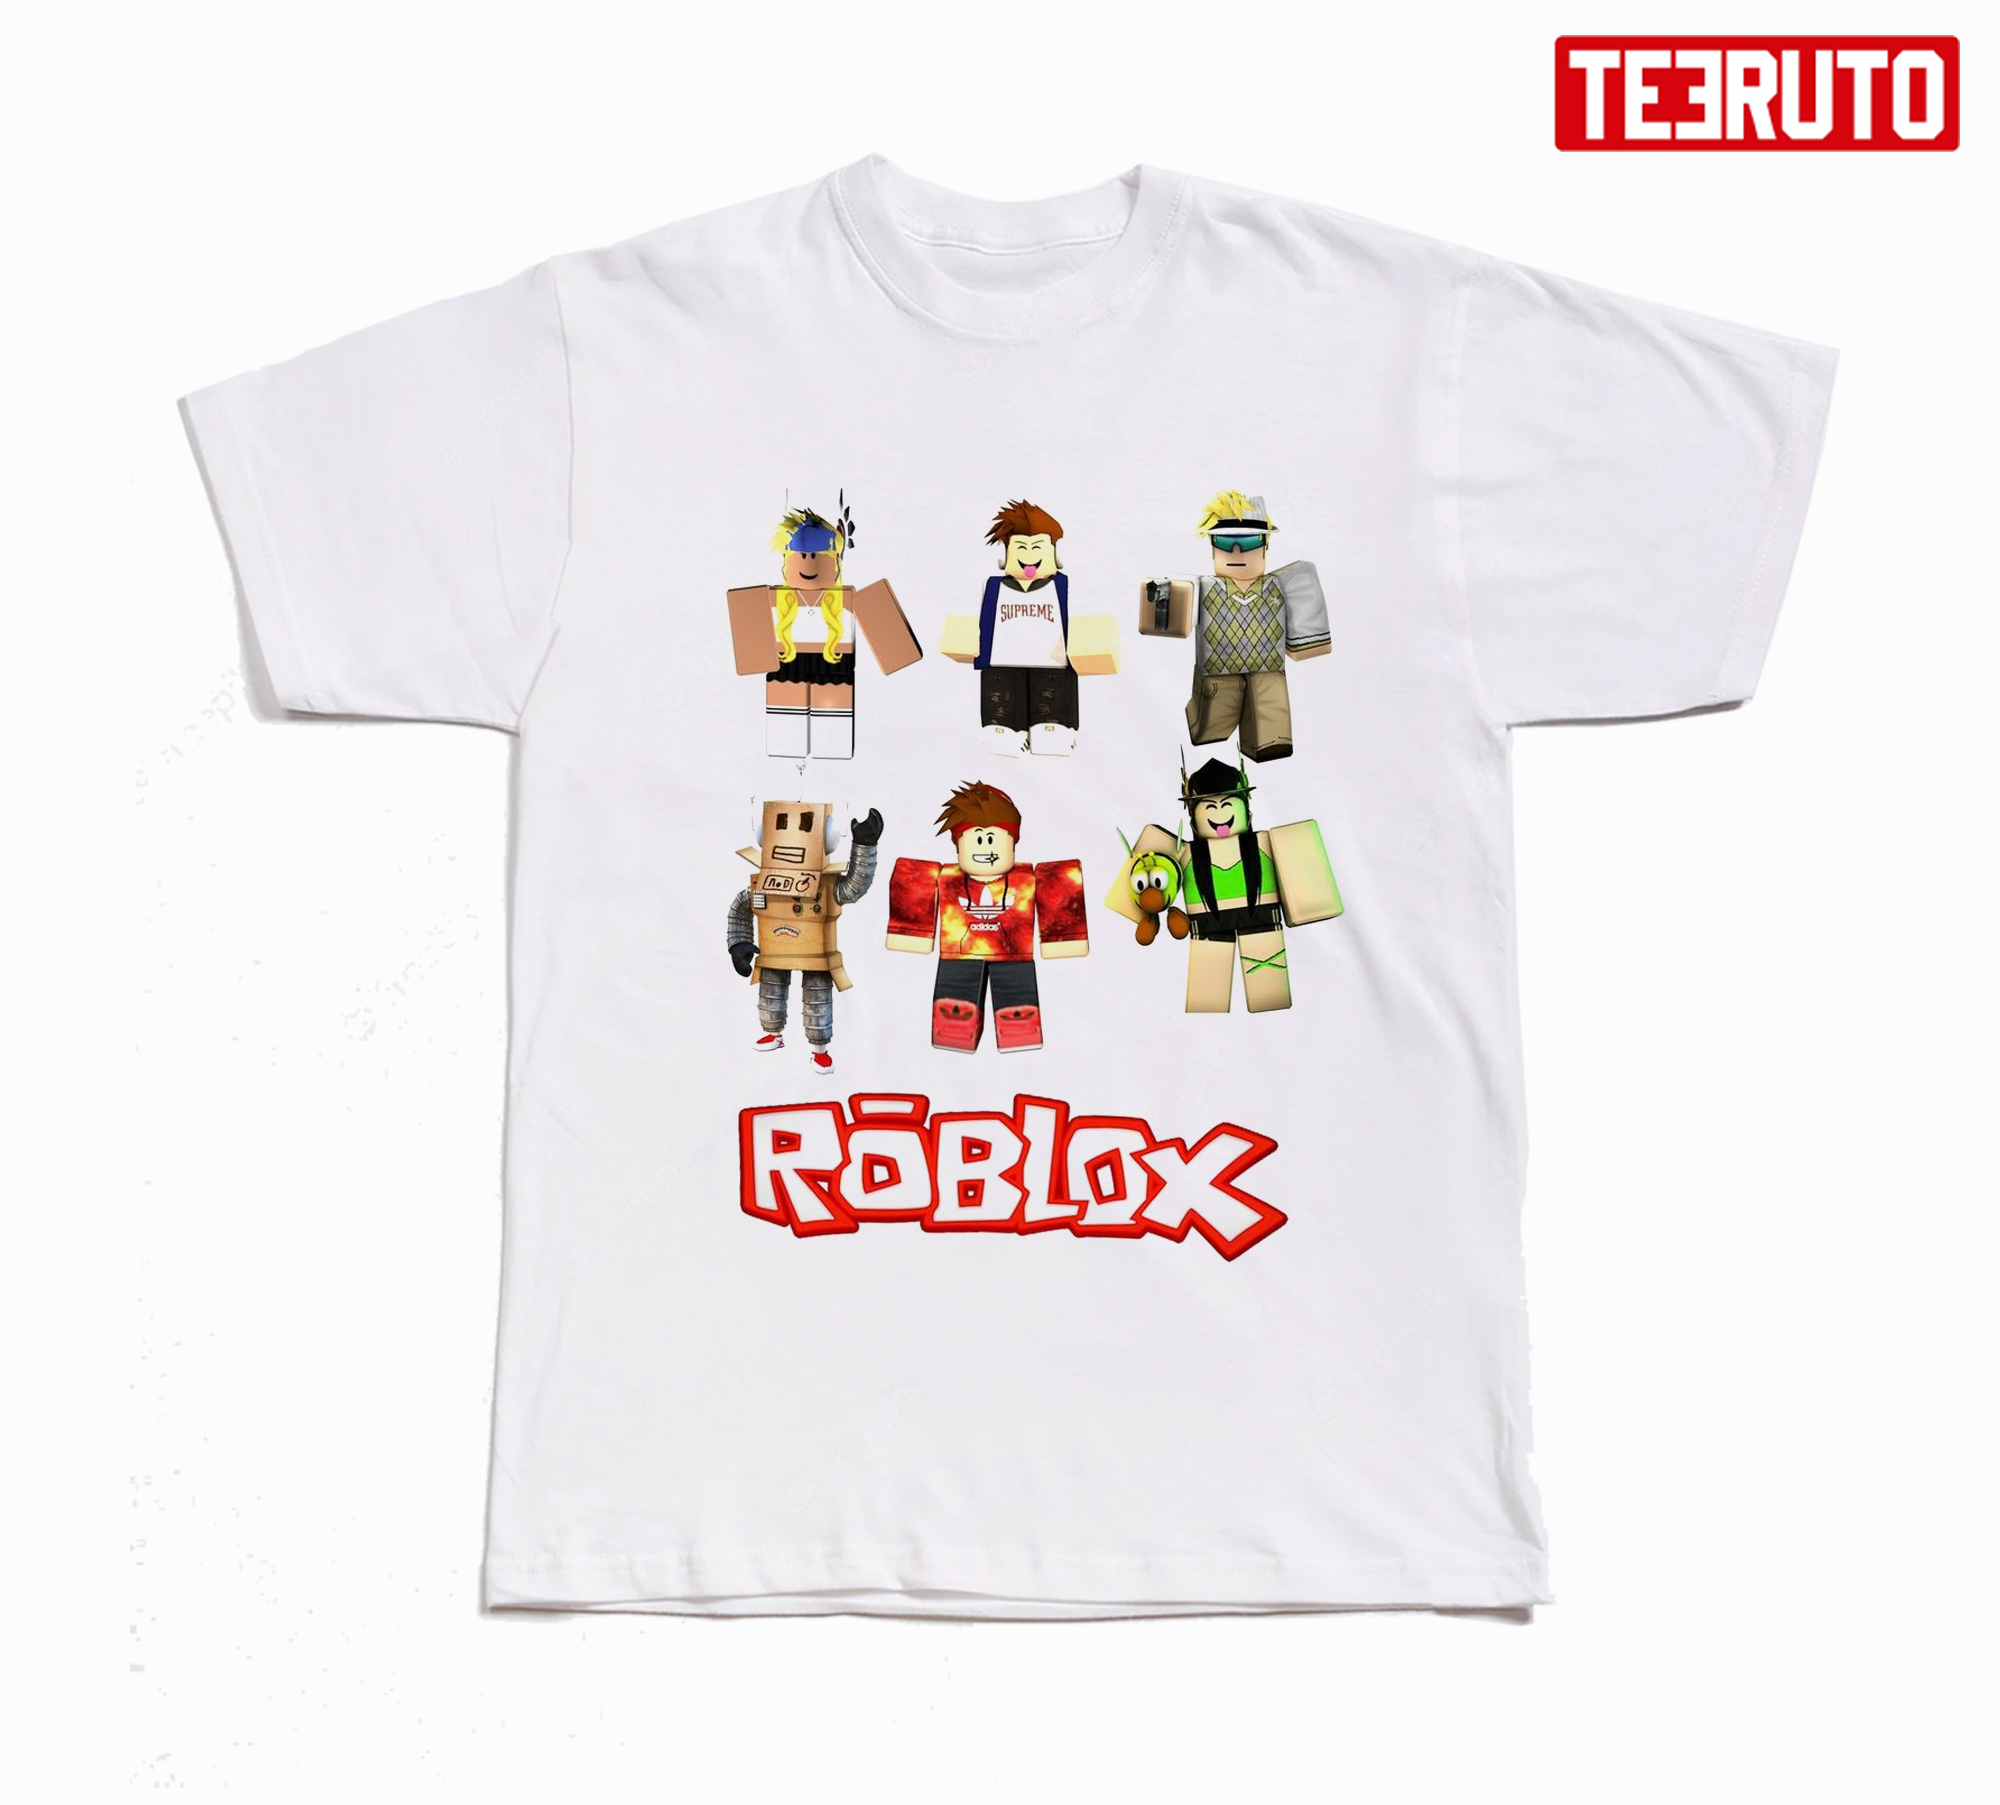 itachi t shirt - Roblox